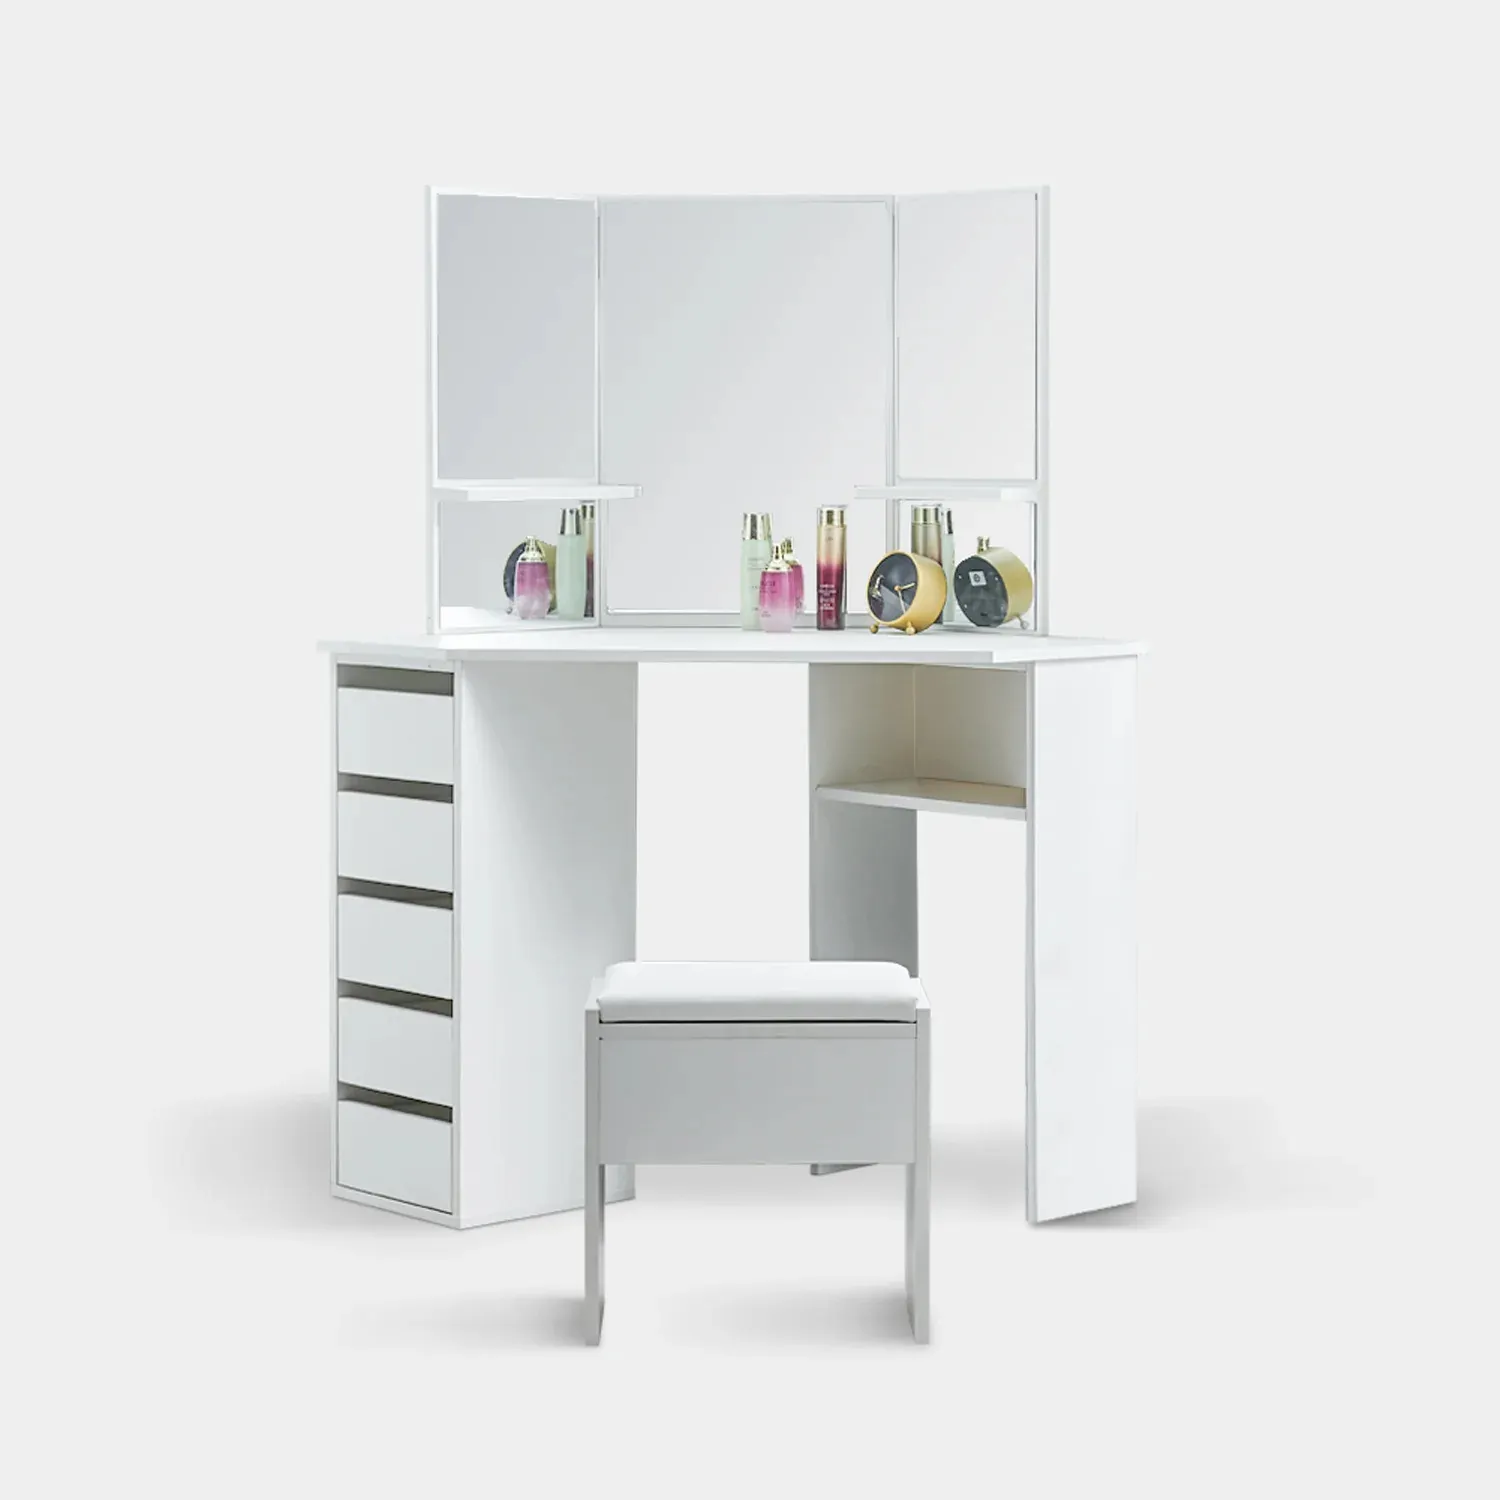 Modern Women Luxury Corner Wall Mounted Mirrors Cabinet Vanity Makeup Vanities Desk Dressing Table with Drawers Stool Shelf